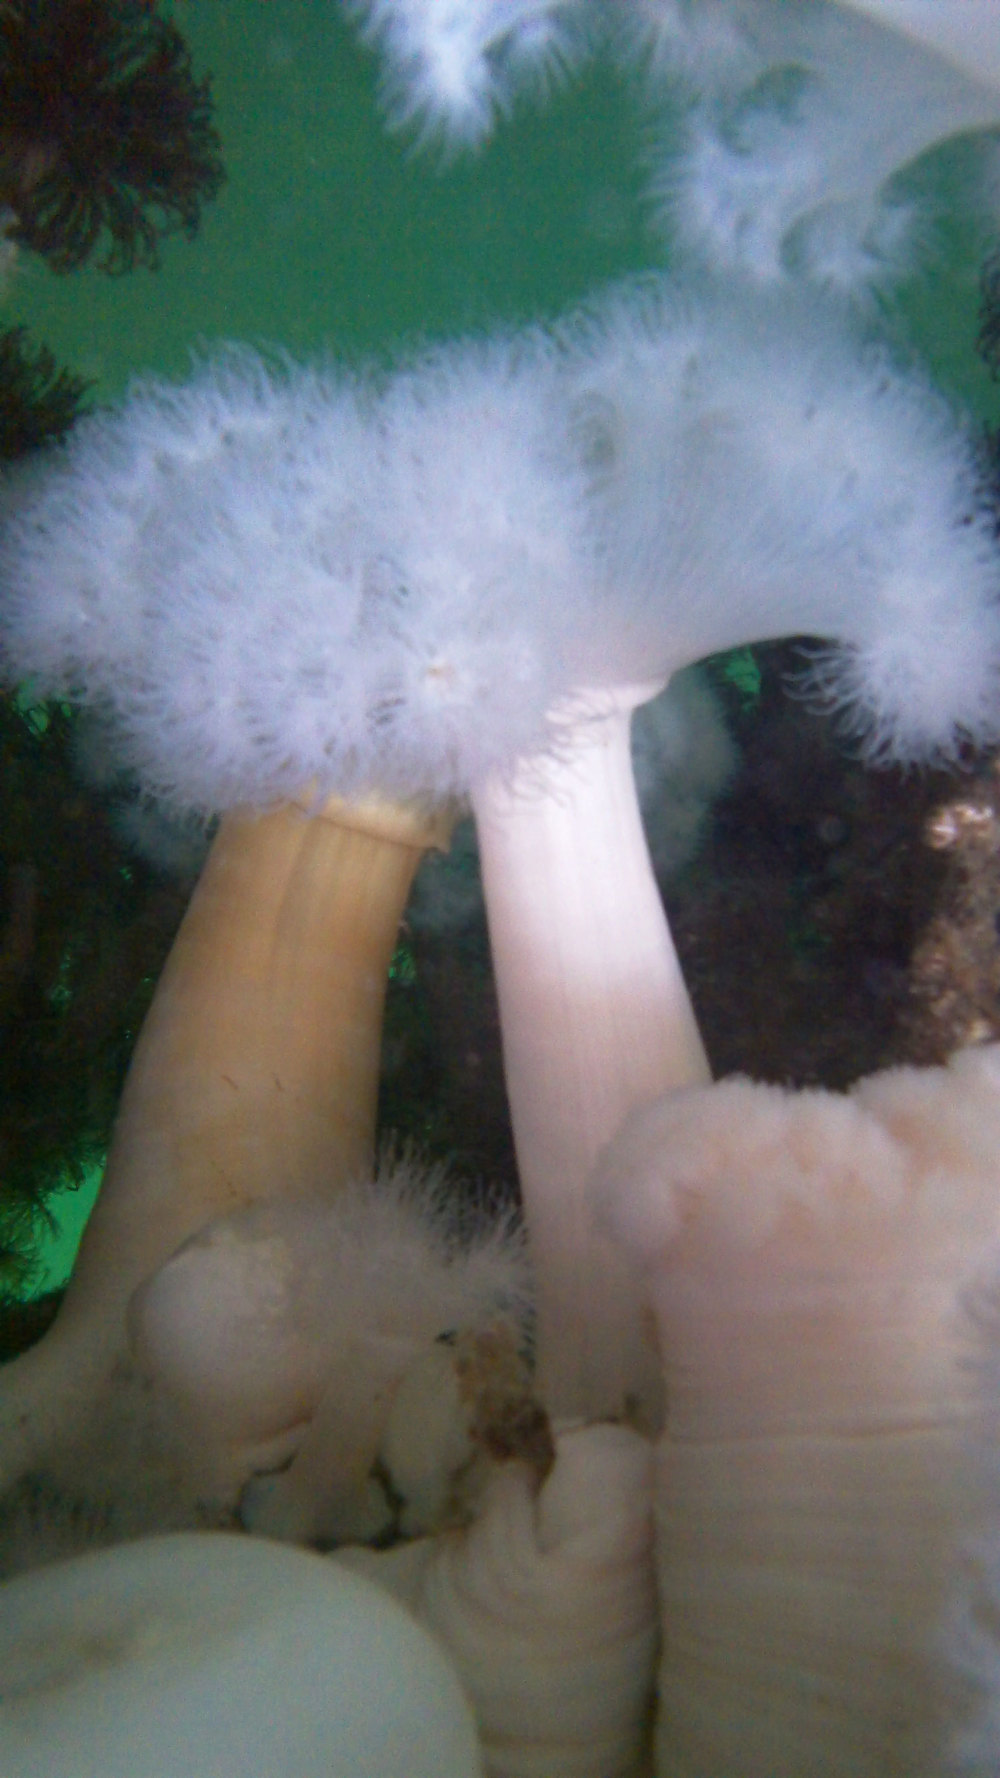  White-plumed anemone (  Metridium farcimen  ) 